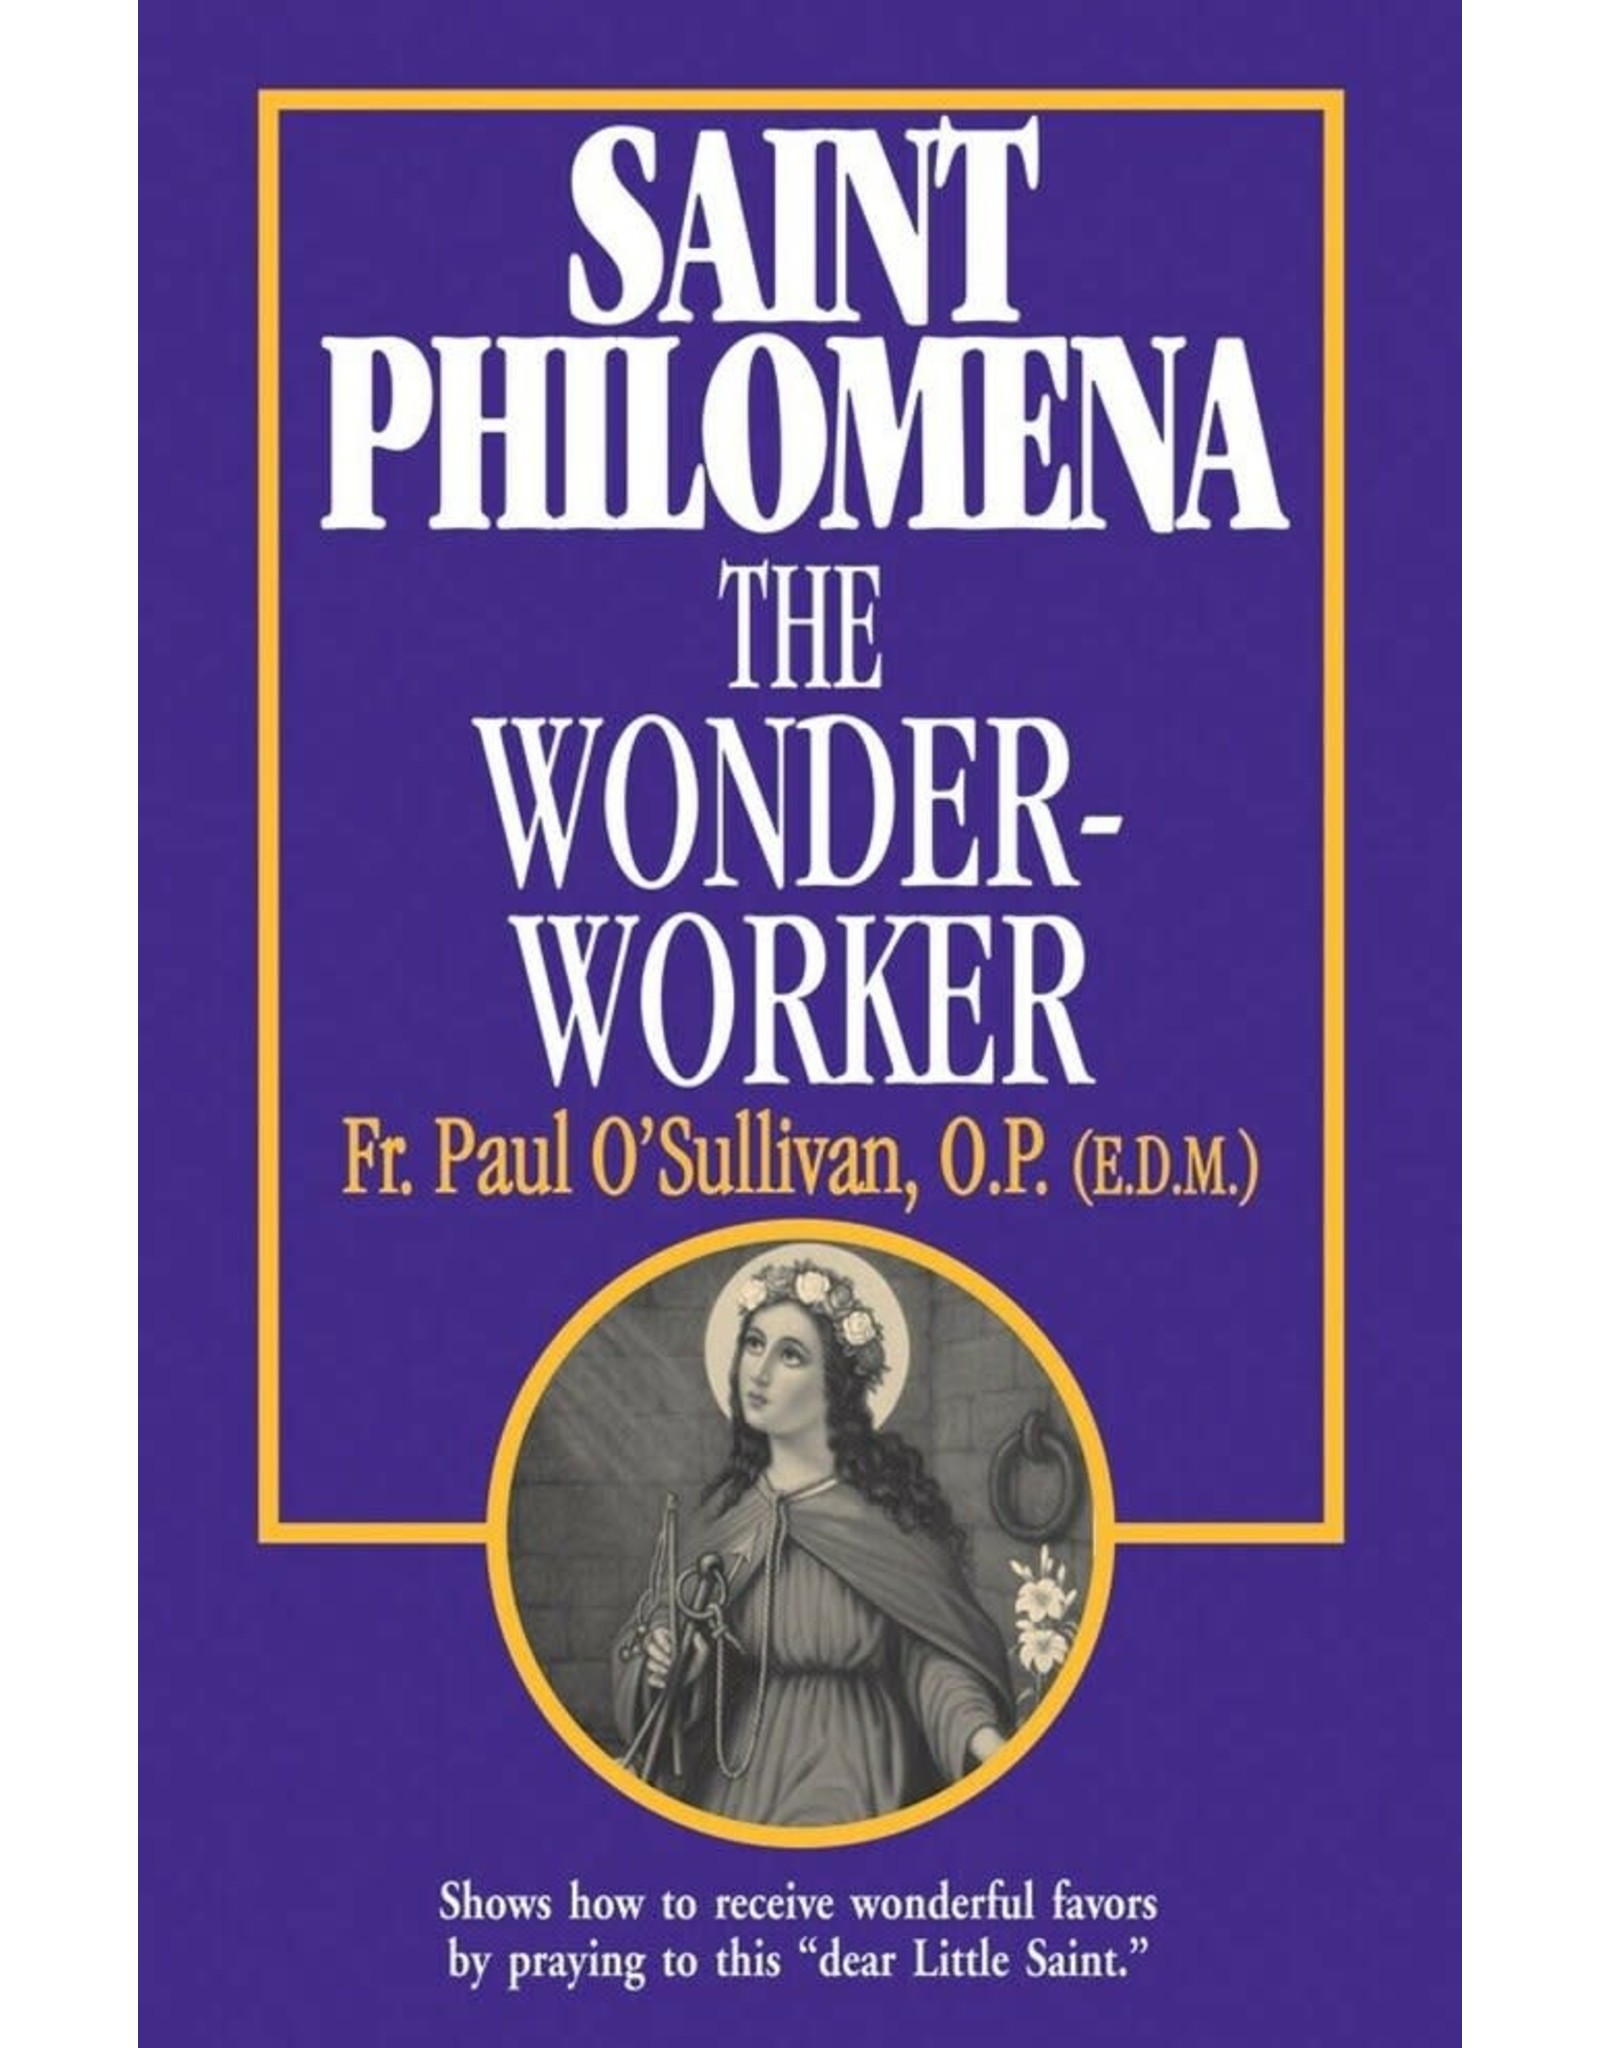 Tan Books St Philomena The Wonder-Worker by Rev. Fr. Paul O'Sullivan, O.P. (E.D.M.) (Paperback)